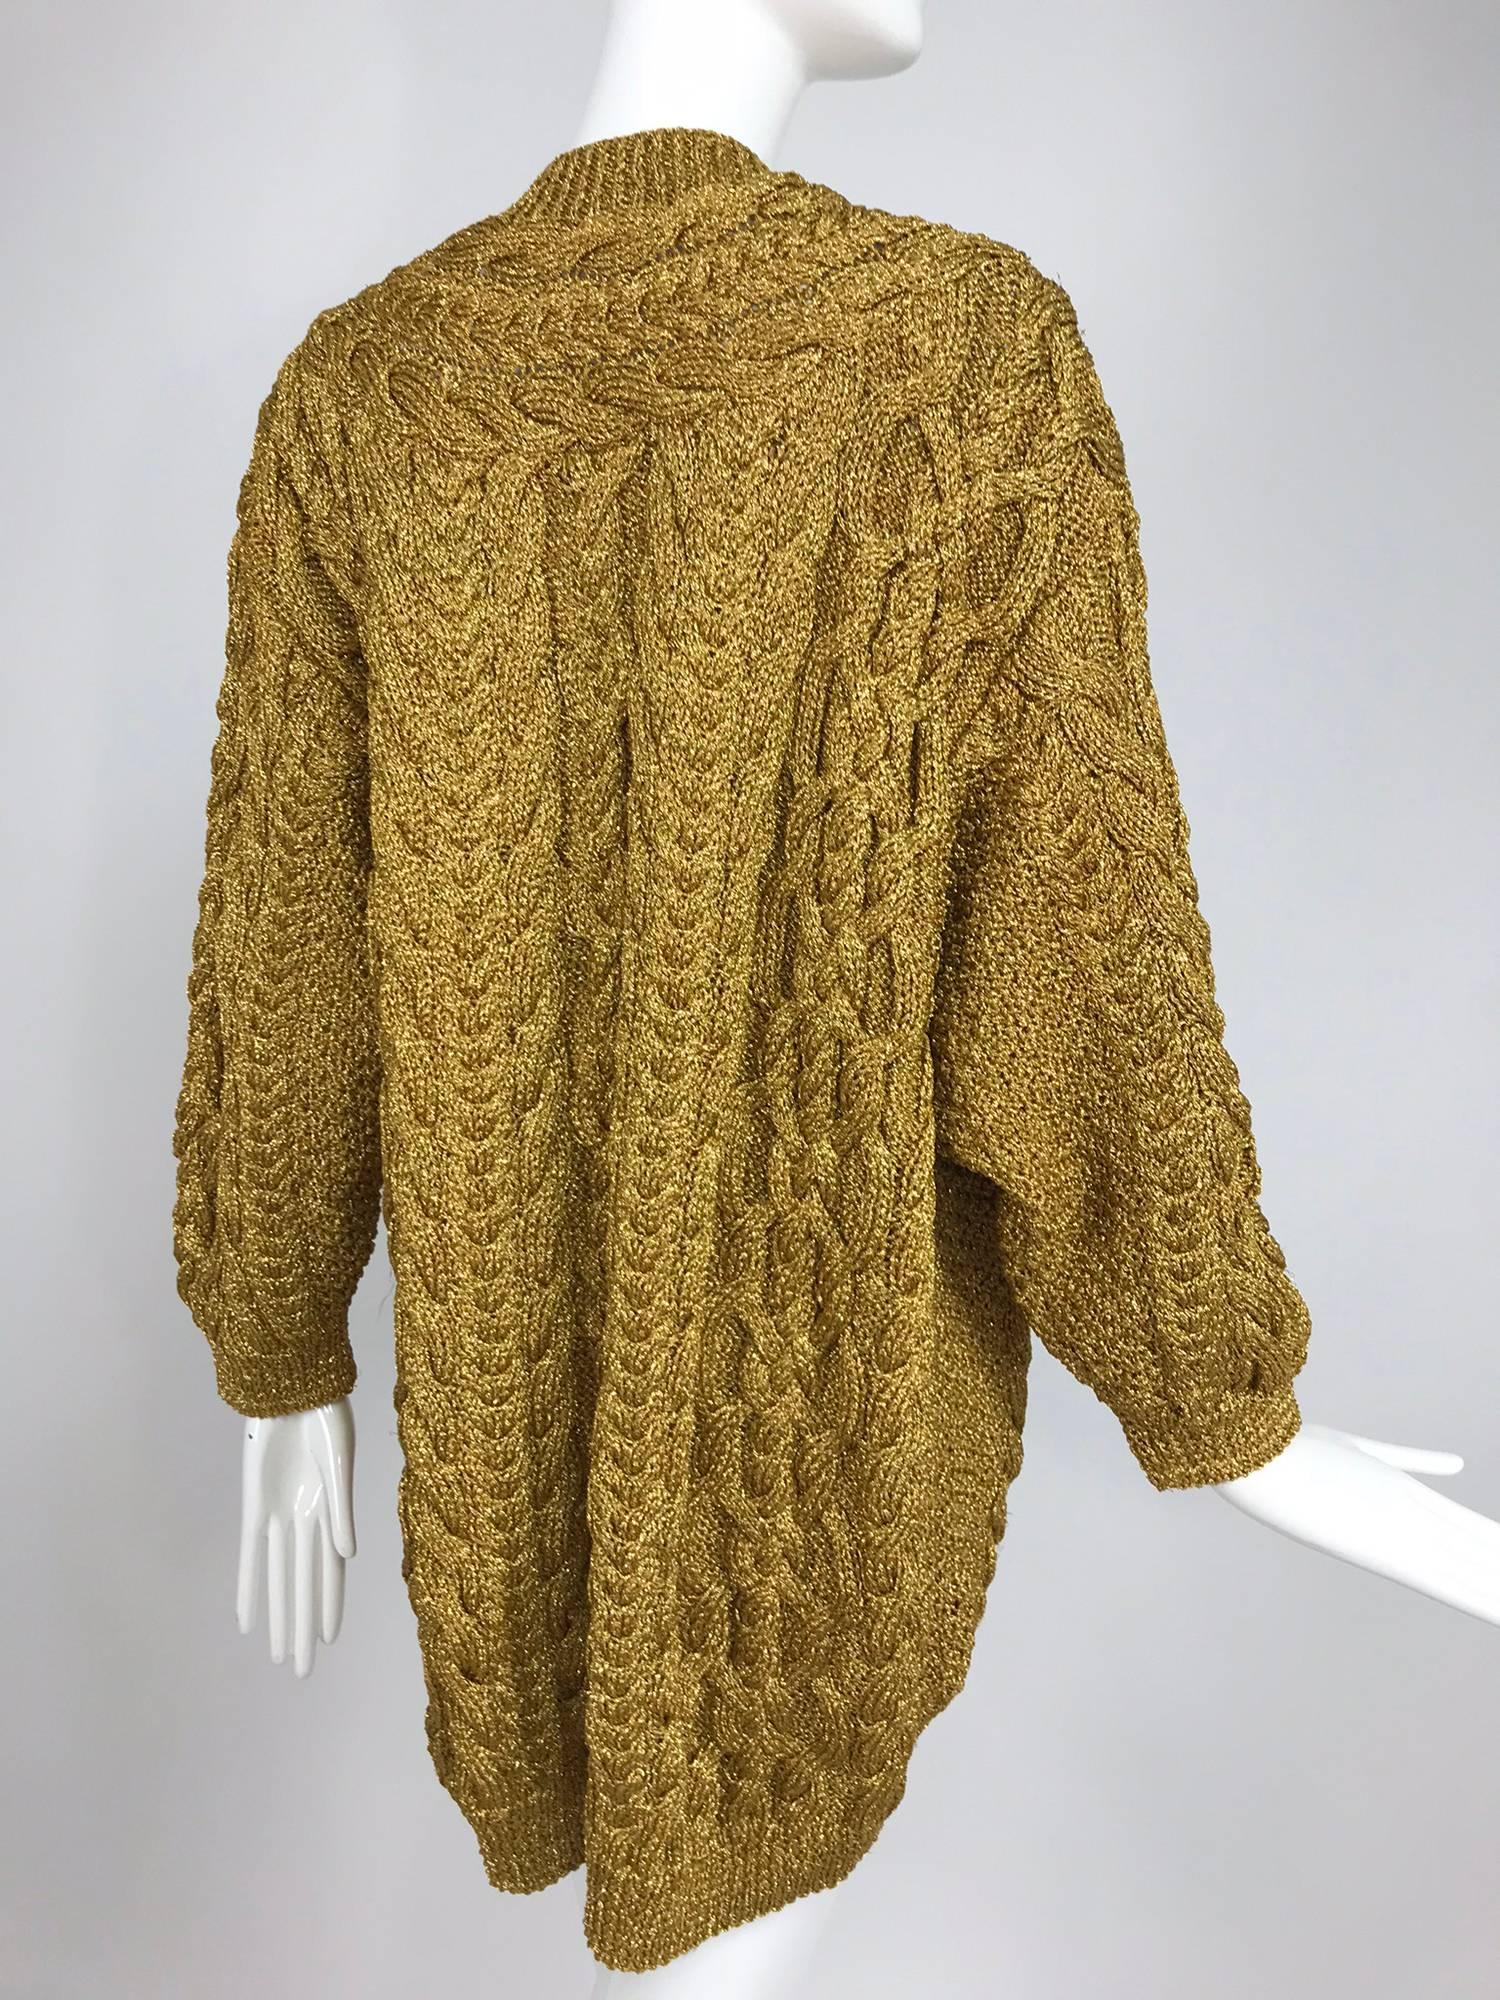 Brown Anne Klein chunky gold metallic knit cardigan sweater 1990s